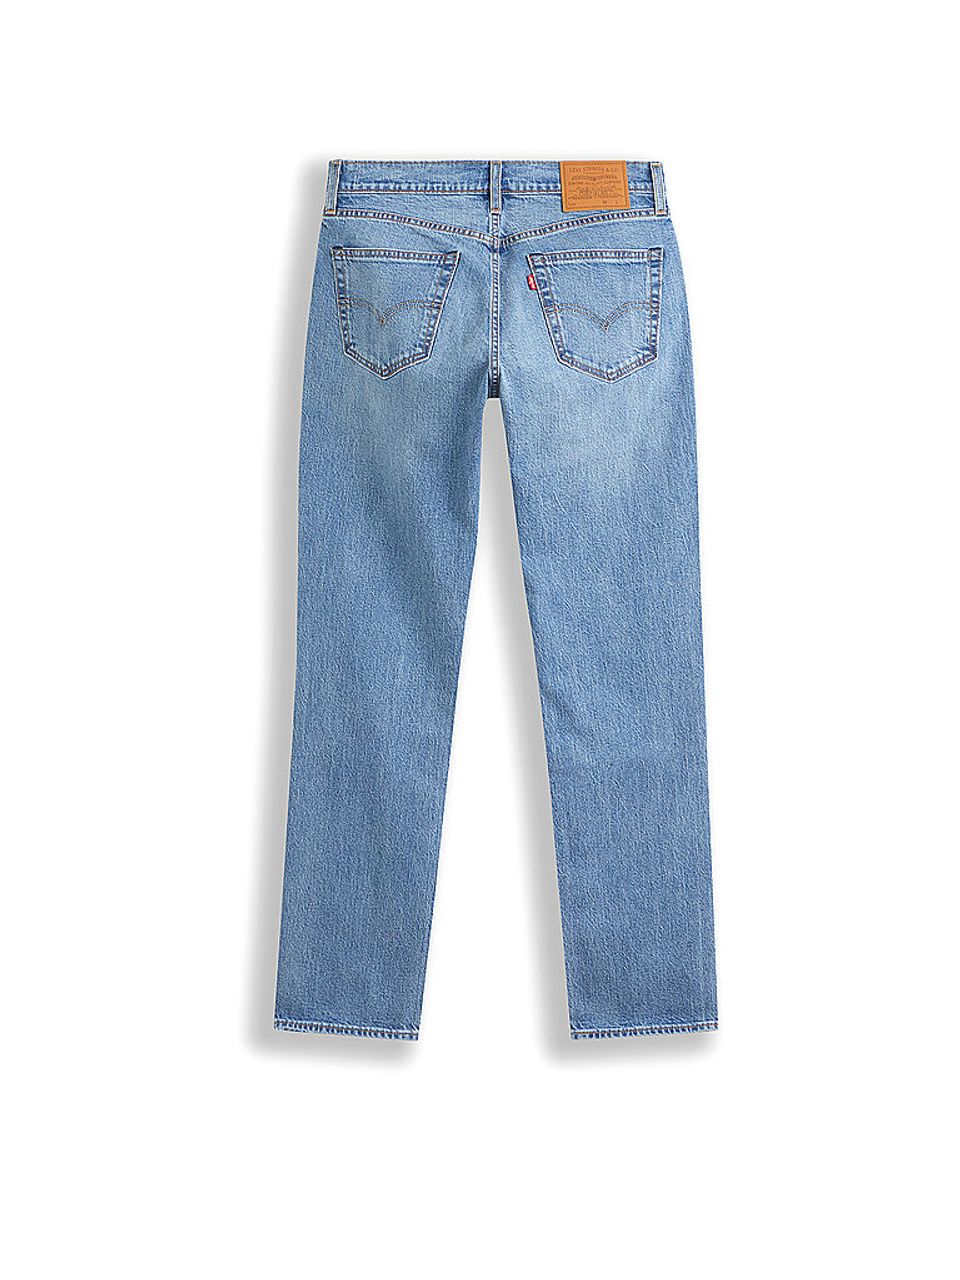 LEVI'S Jeans Slim Fit 511 Stone Horizon blau | 29/L34